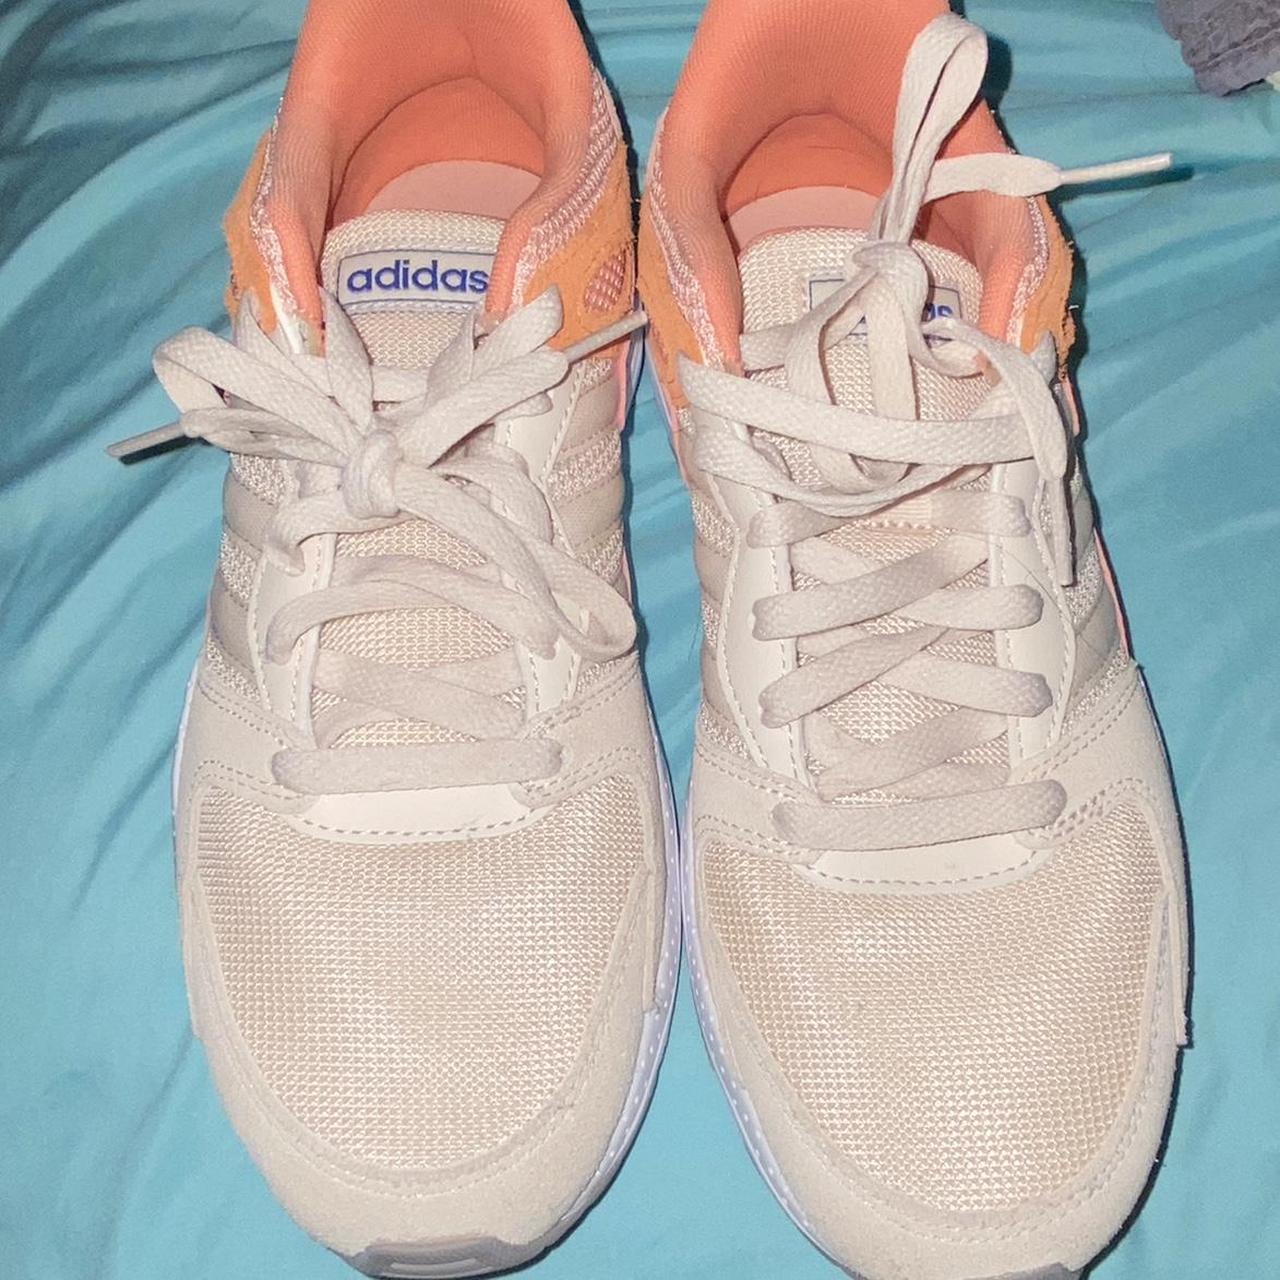 Brand new adidas tennis shoes - Depop